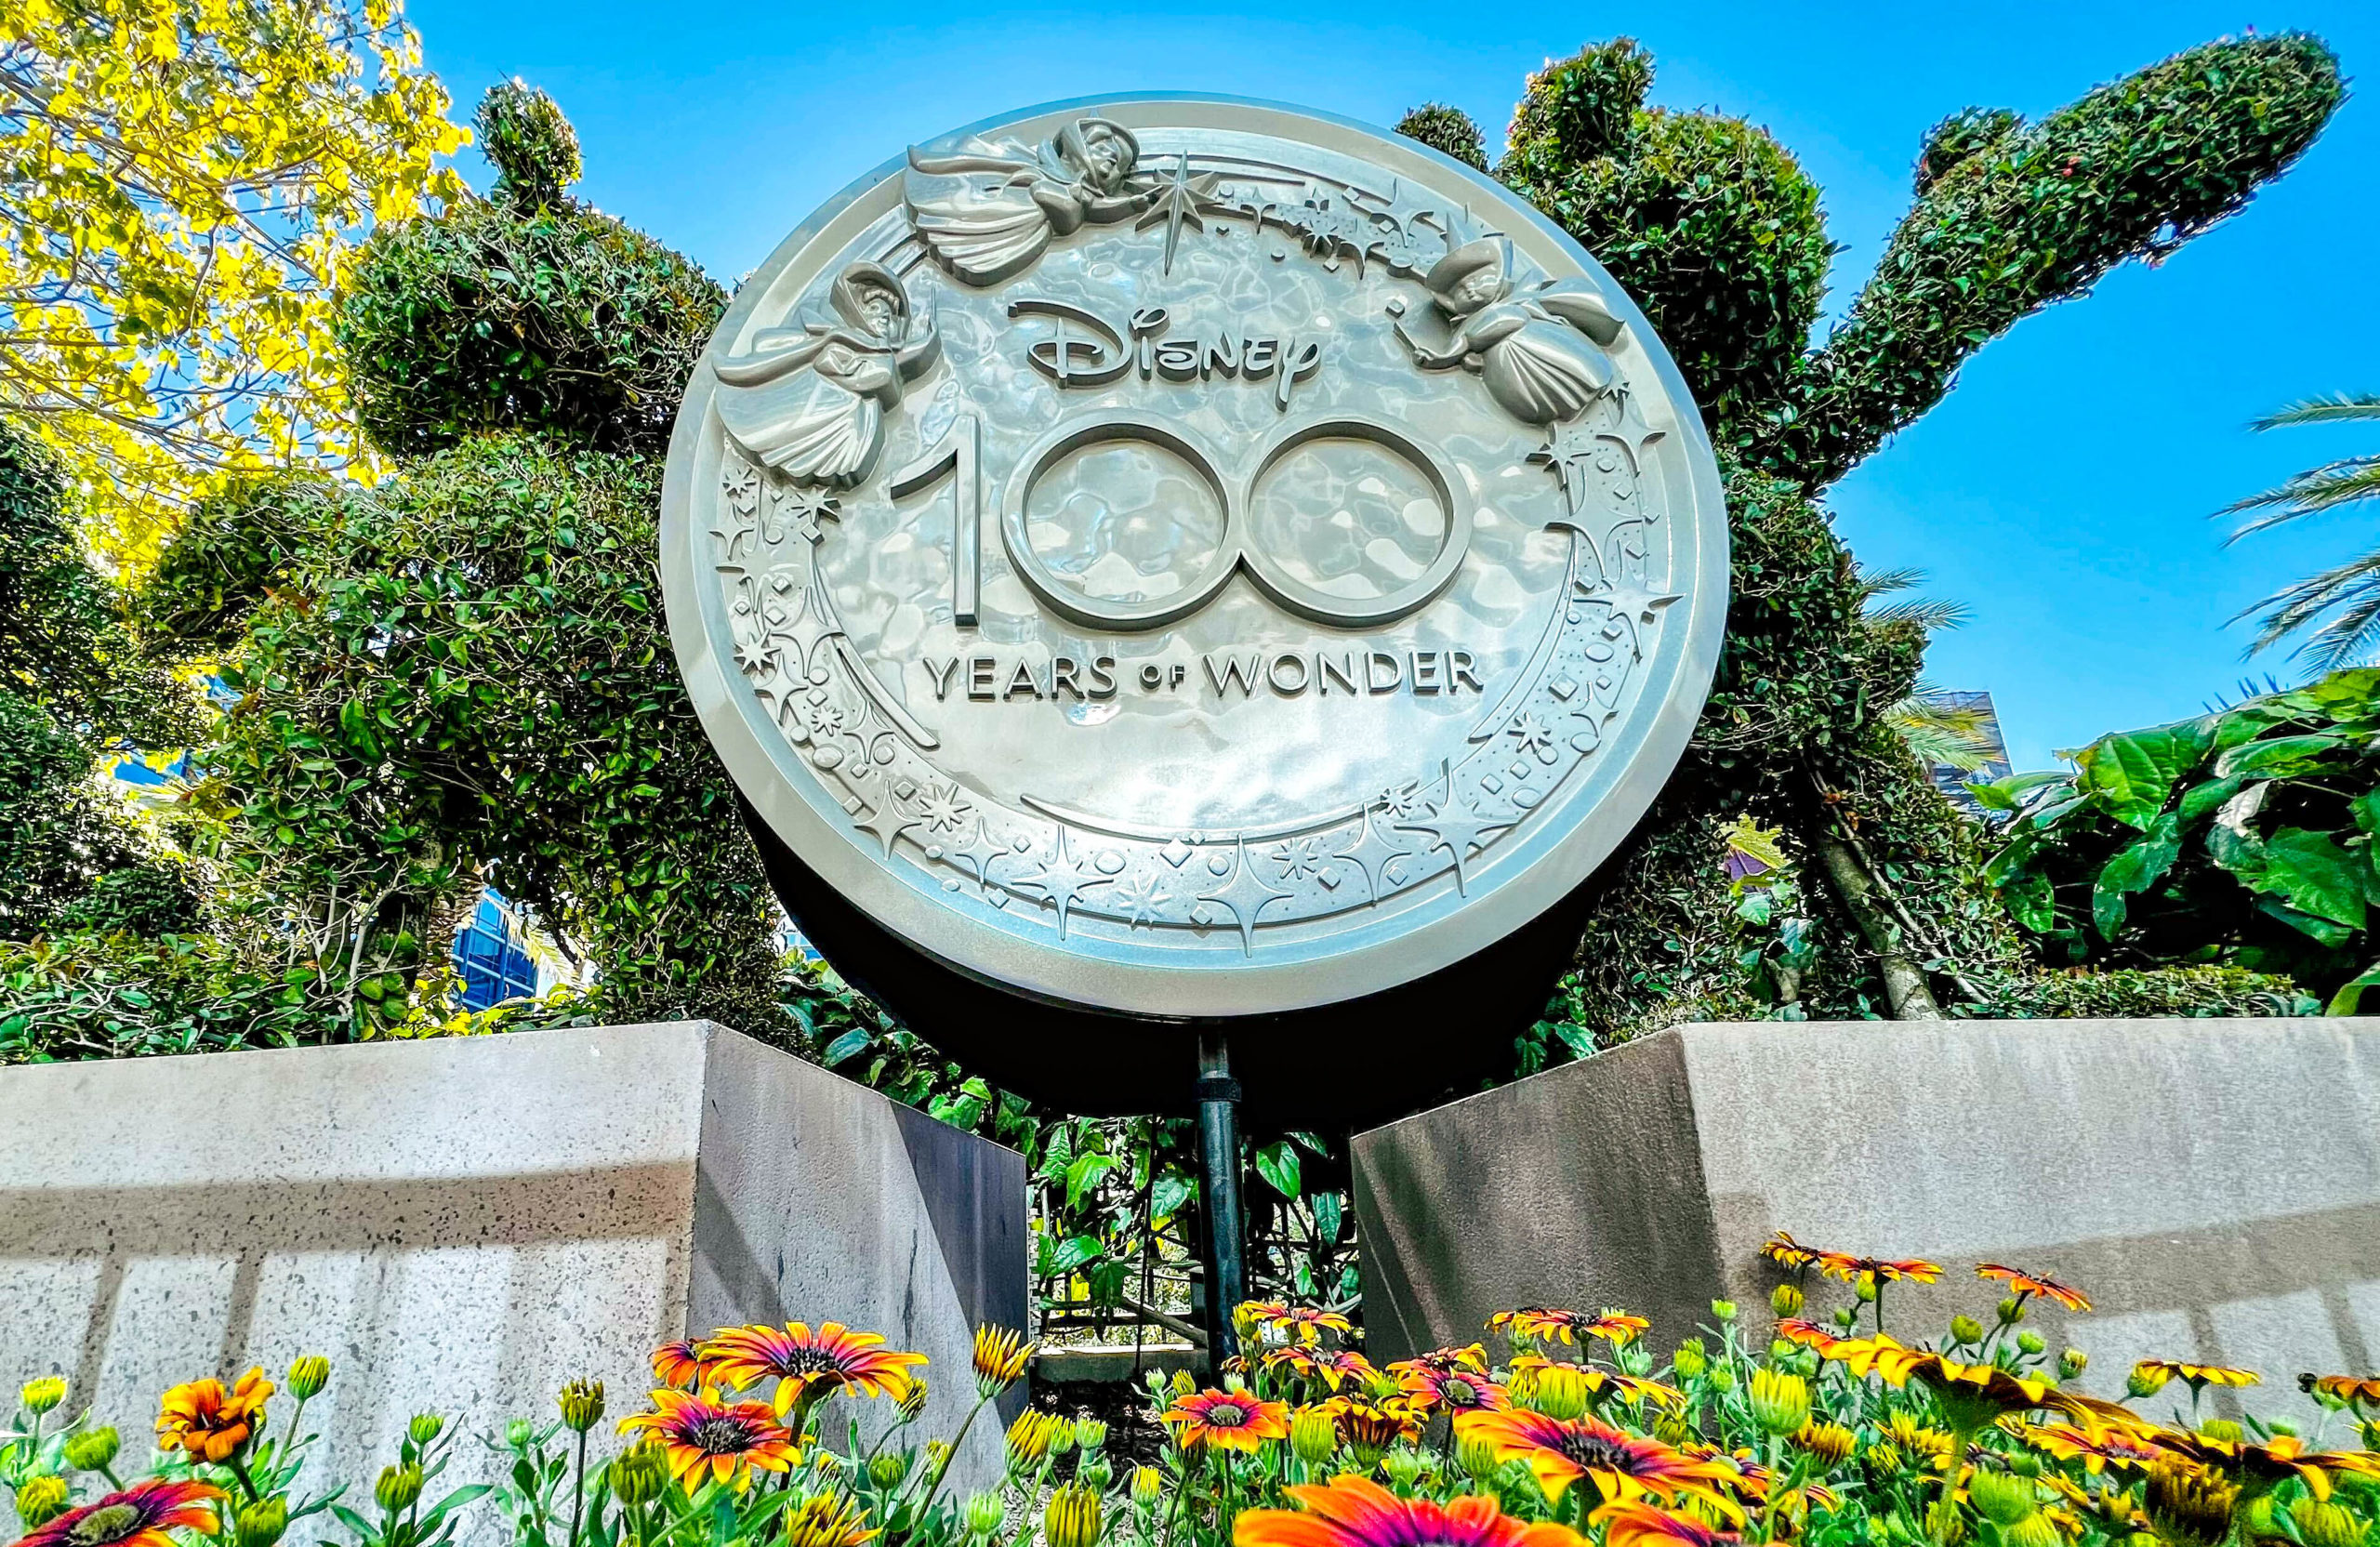 Disney100 Medallion